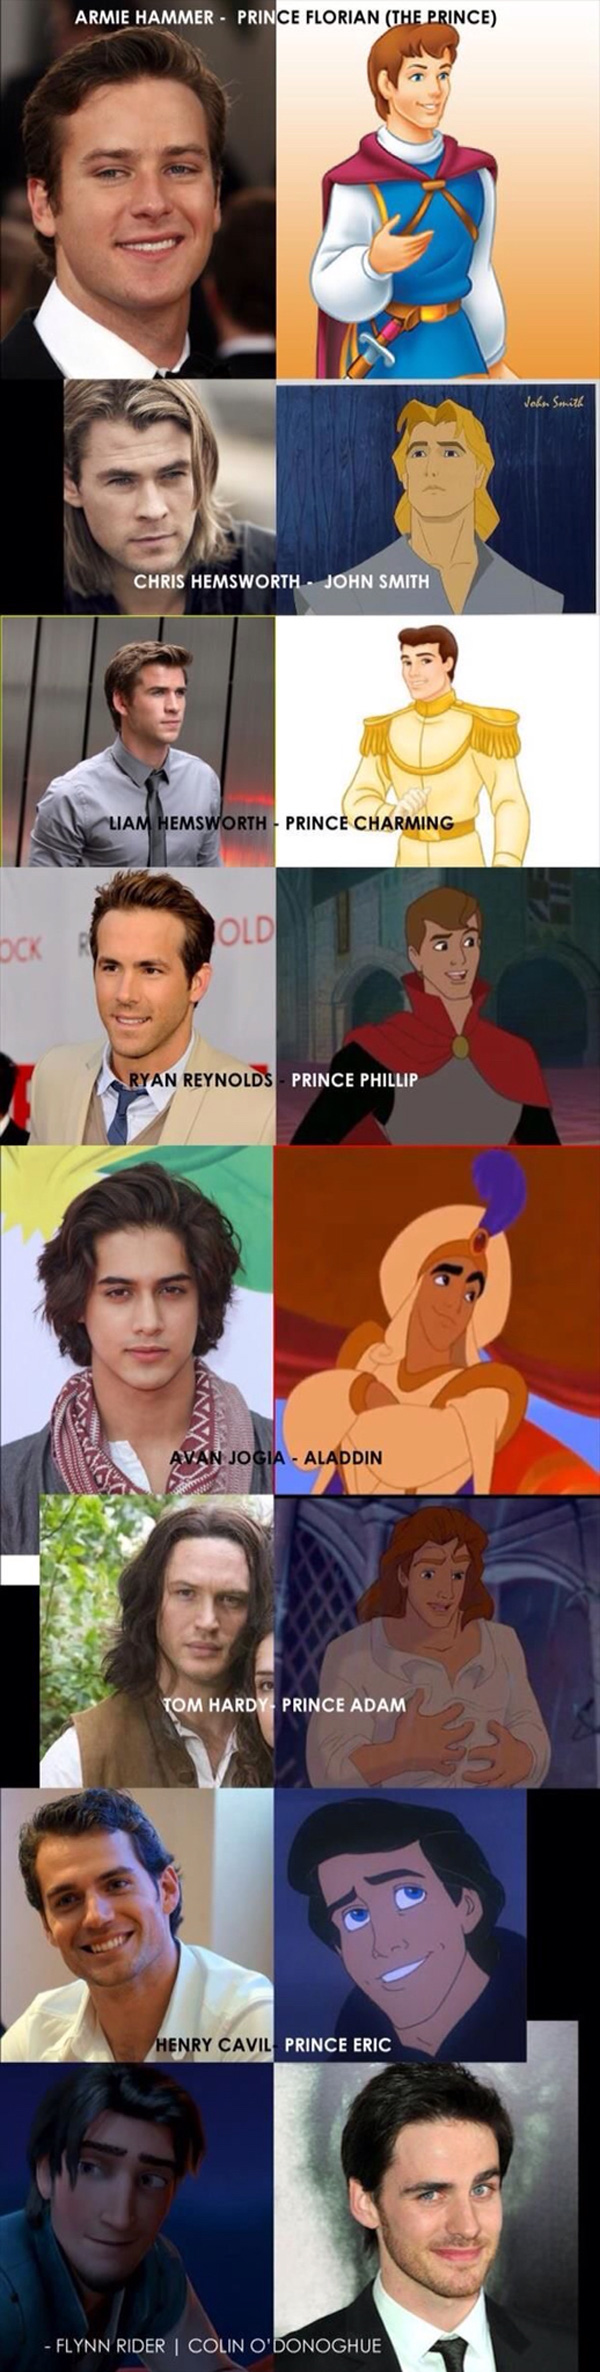 Disney Prince Fan Casting